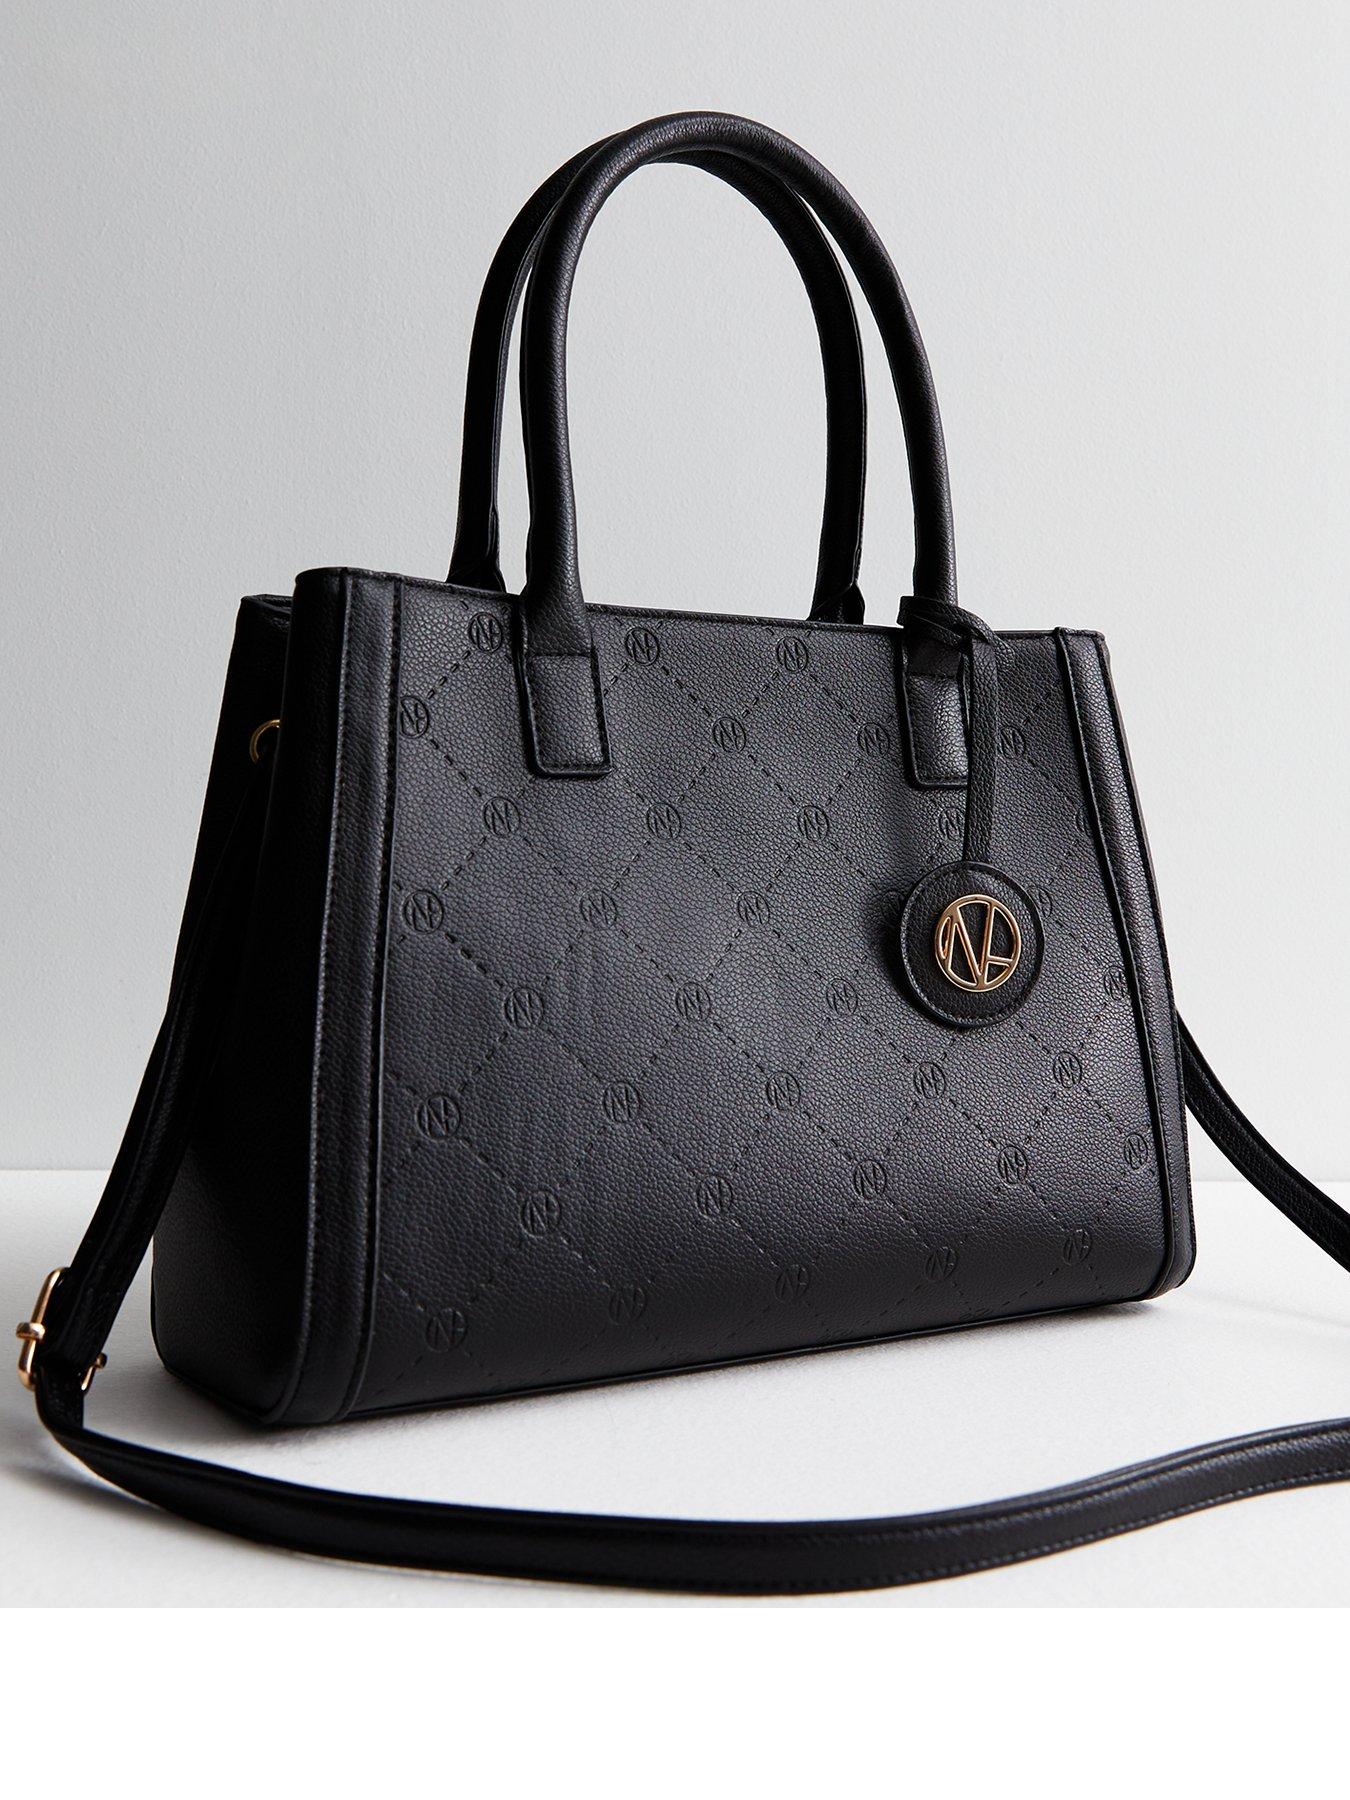 Fashion Women Handbags Embroidered Handbag New Look Cross-Body Bags for  Ladies Satchel Shoulder Bags,Gray - Walmart.com